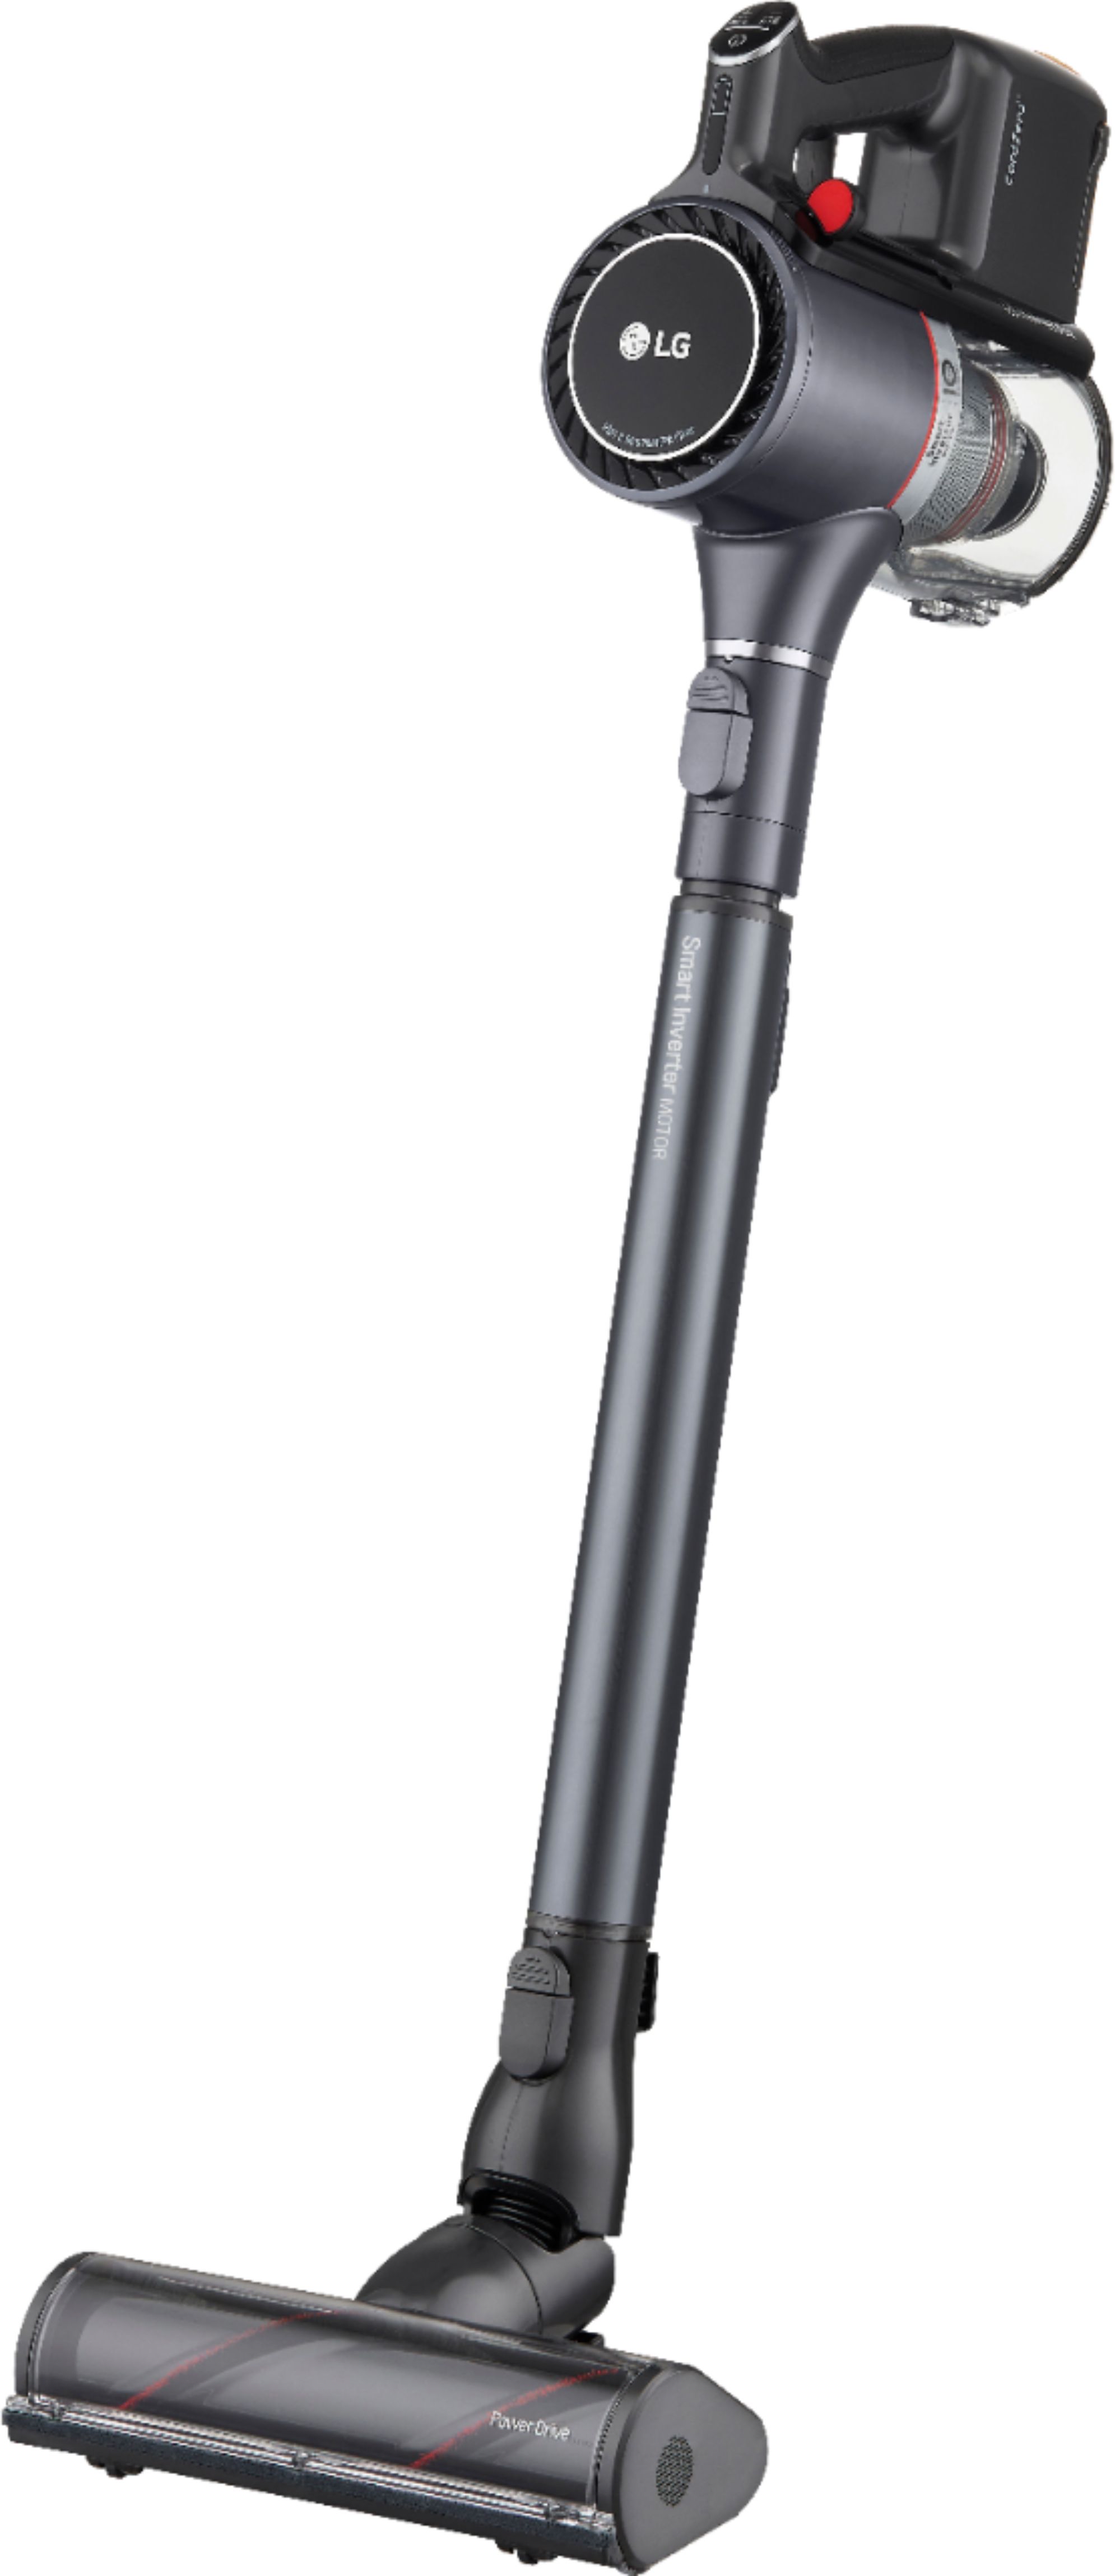 Angle View: LG - CordZero Cordless Stick Vacuum with Kompressor Technology and 120-Minute Run Time - Iron Gray